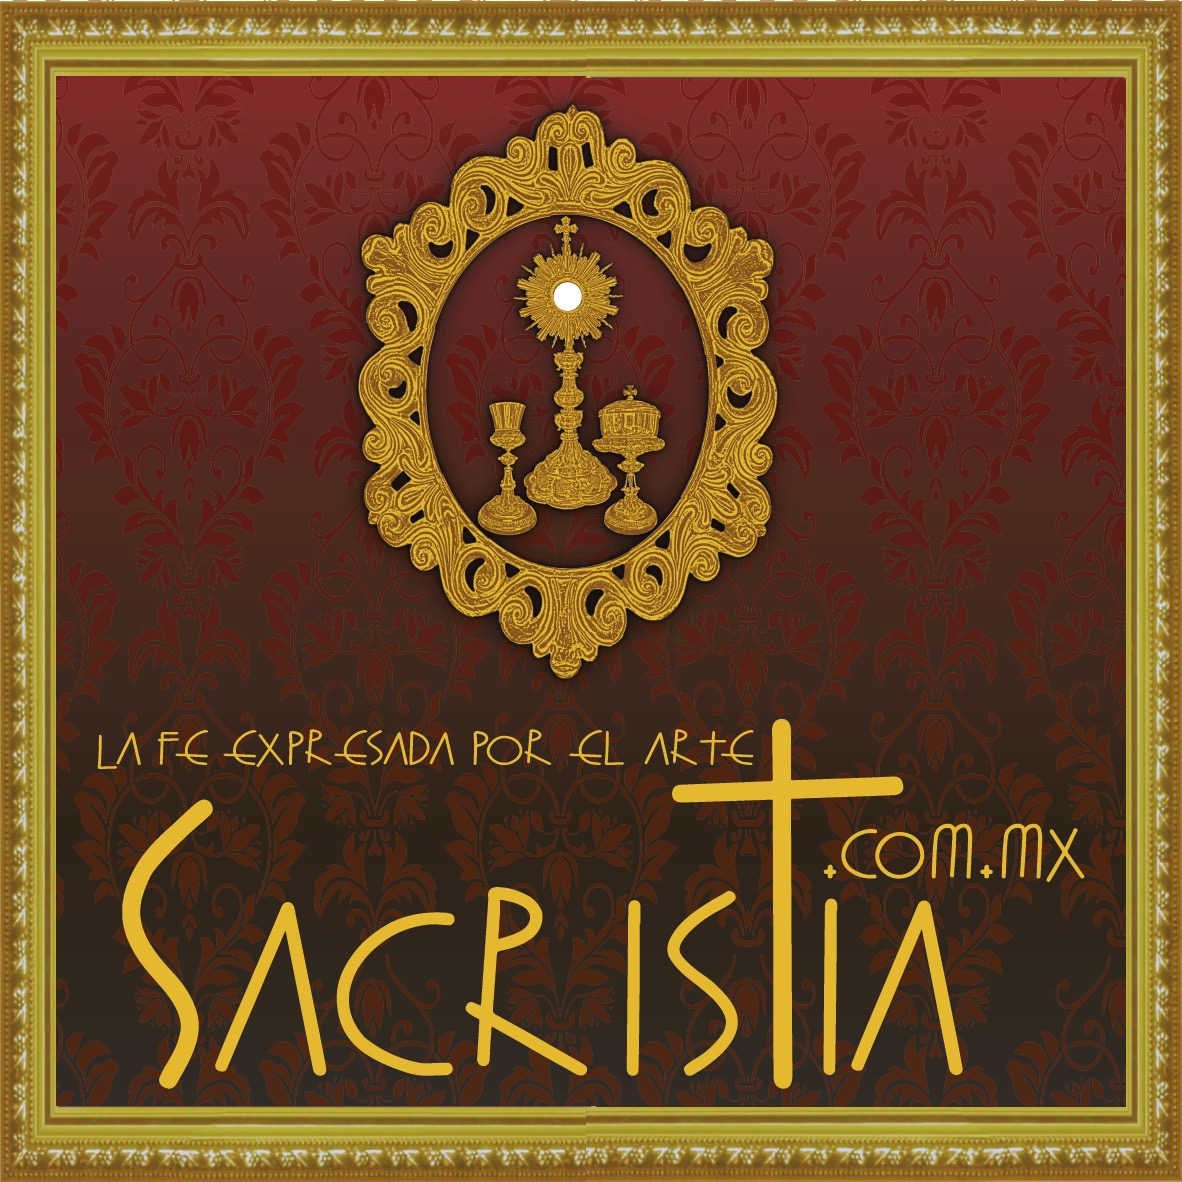 sacristia.com.mx